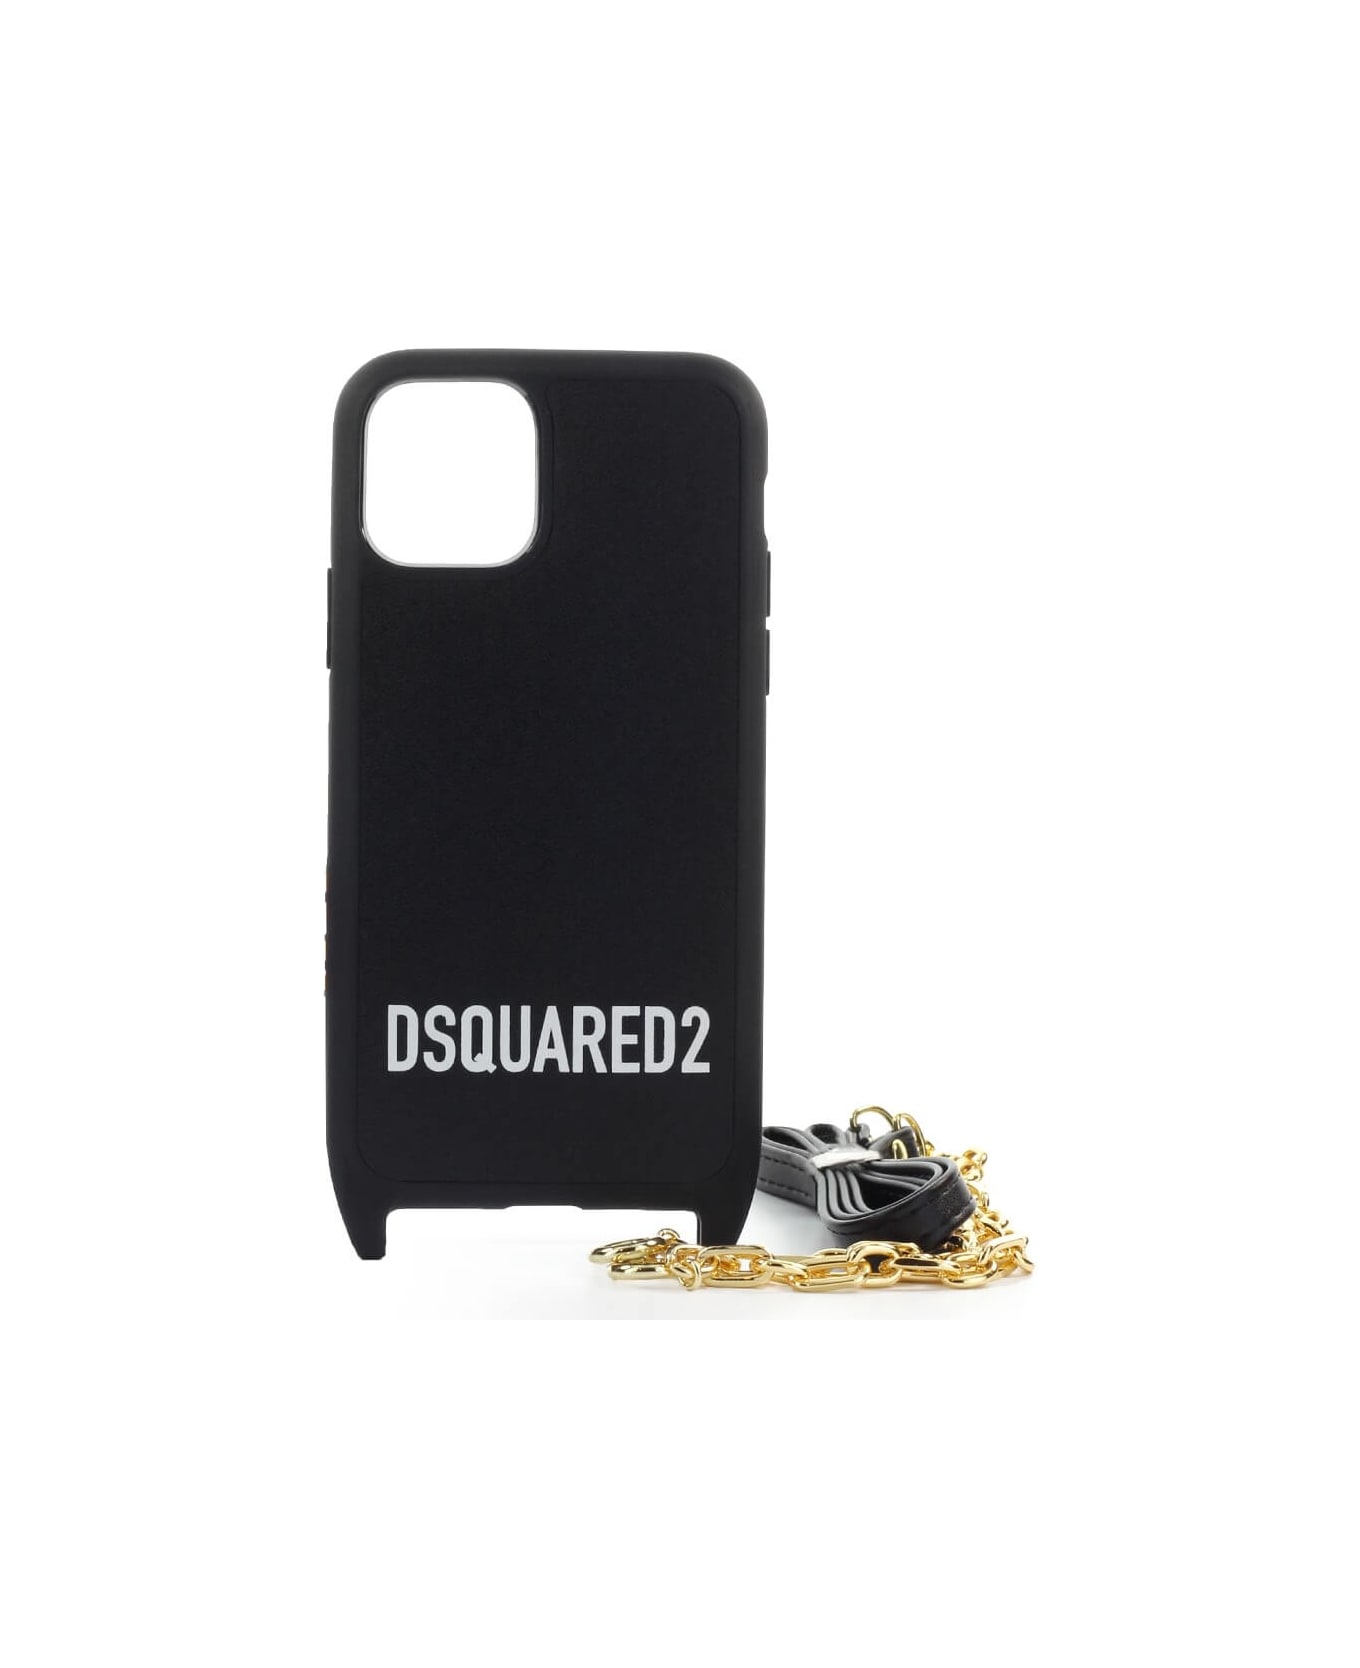 Dsquared2 Black Iphone 11 Pro Case With Logo - Nero/Bianco